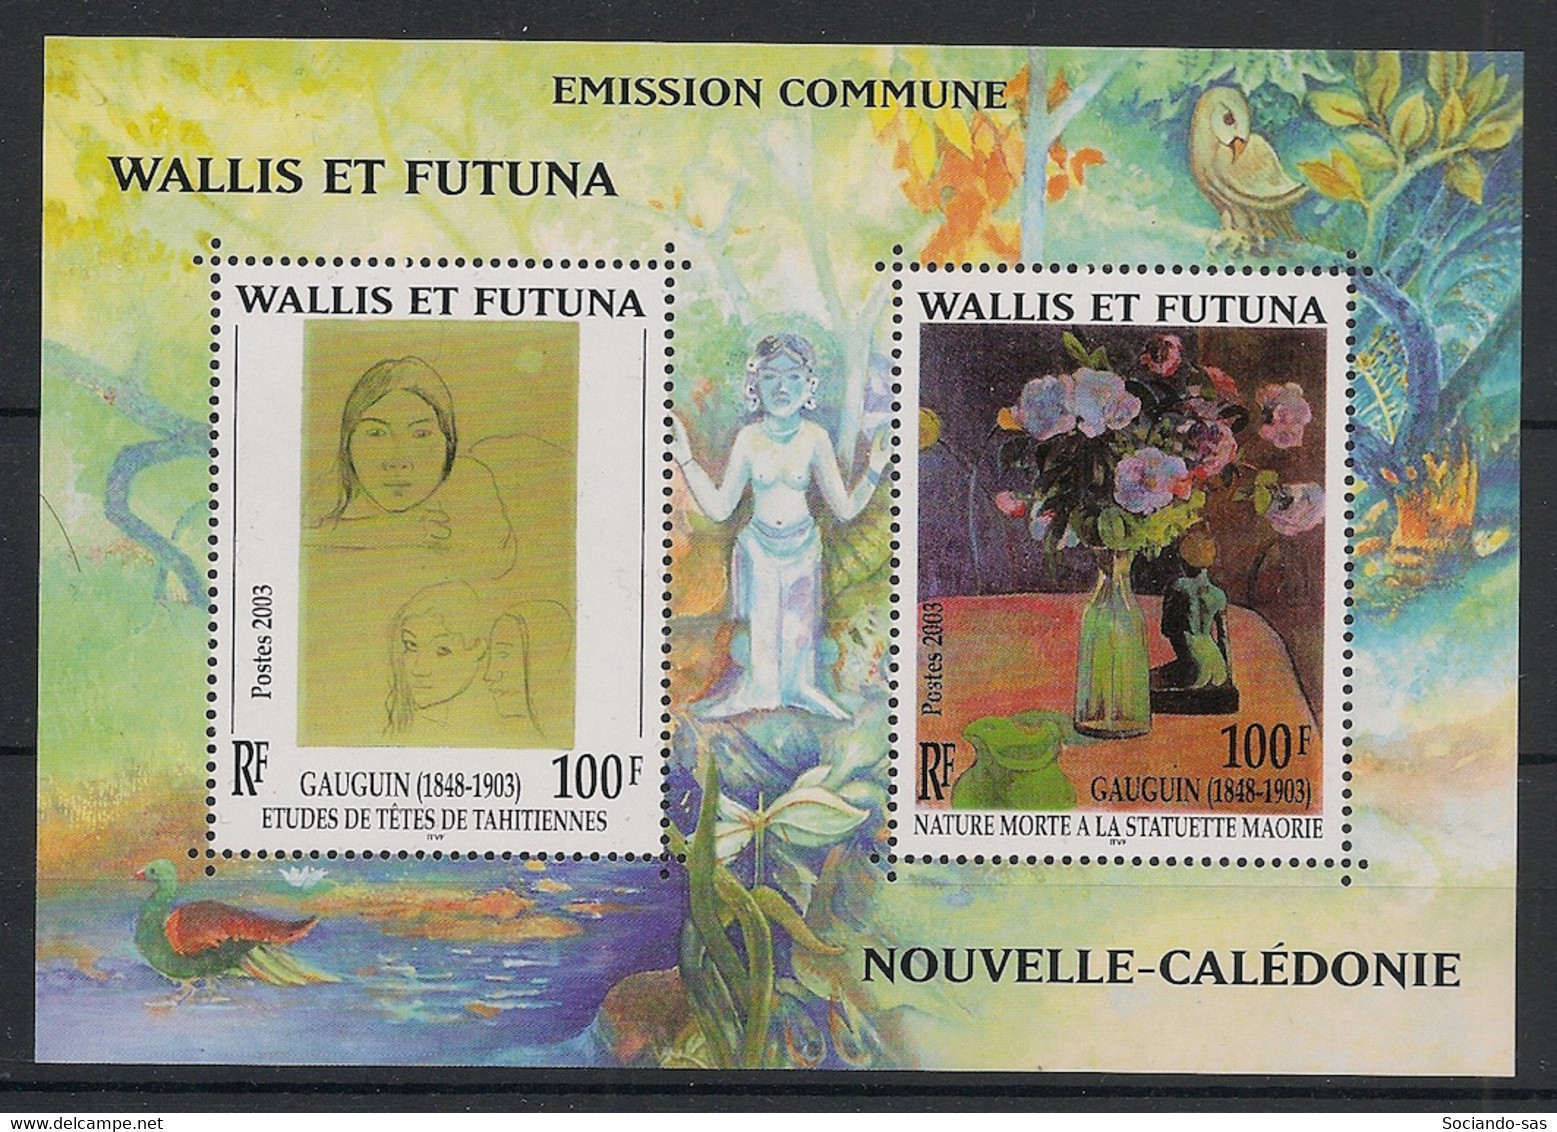 WALLIS ET FUTUNA - 2003 - Bloc Feuillet BF N°YT. 13 - Gauguin - Neuf Luxe ** / MNH / Postfrisch - Blocks & Kleinbögen